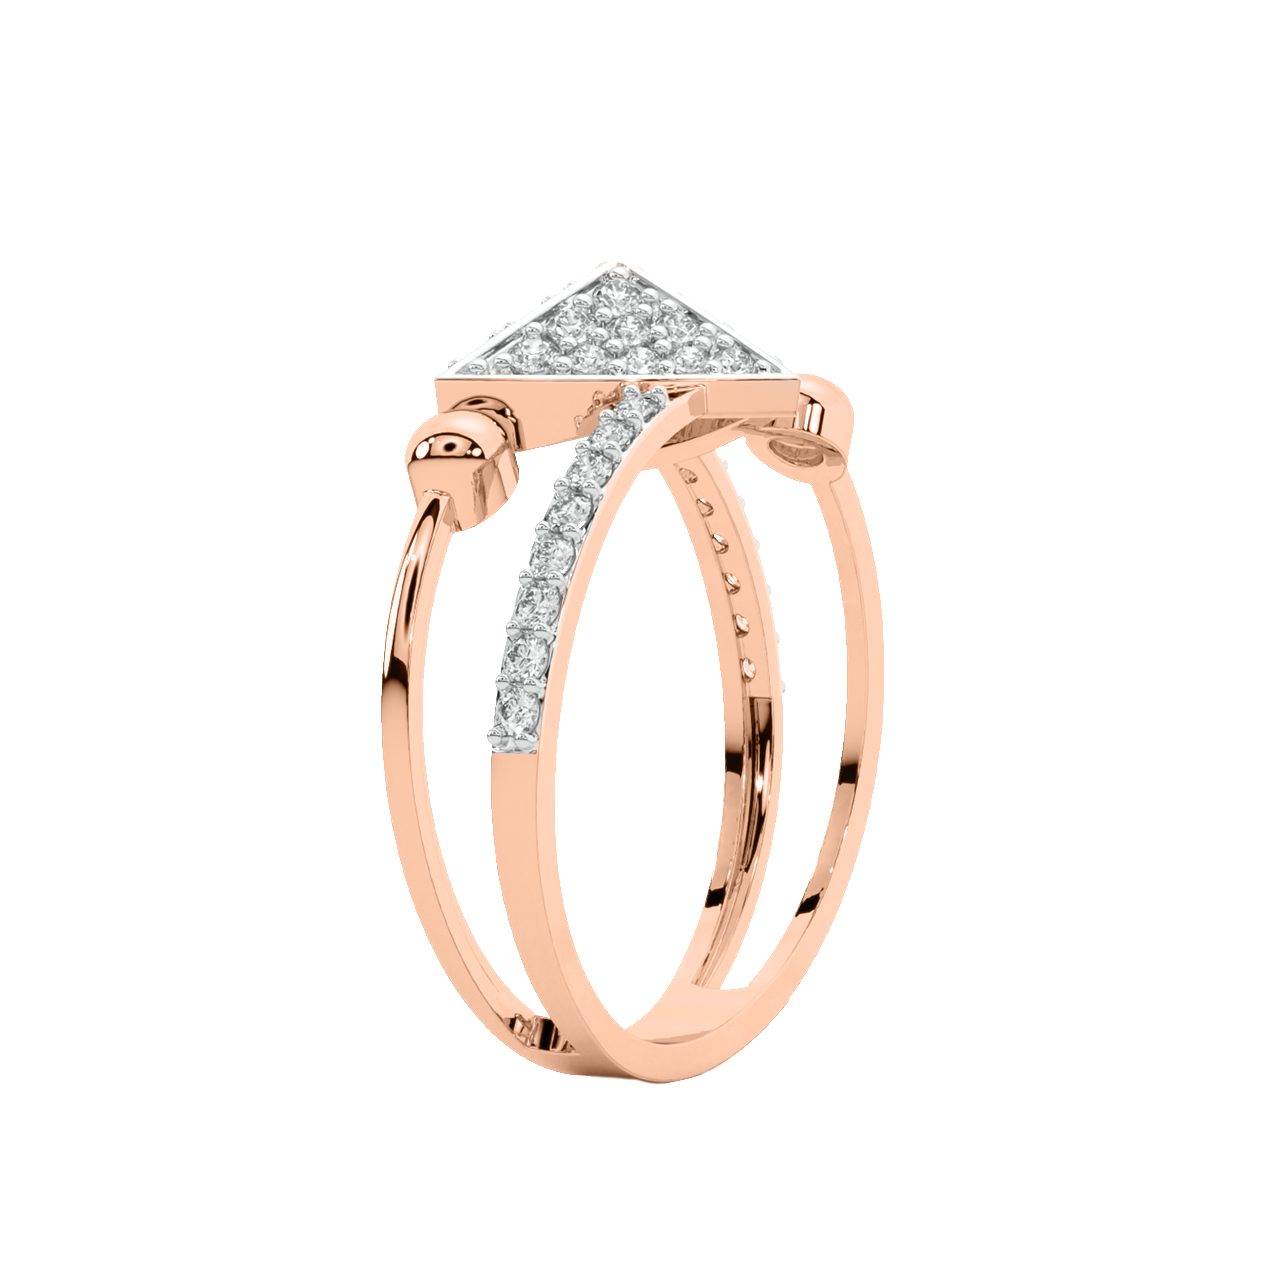 Asher Round Diamond Engagement Ring